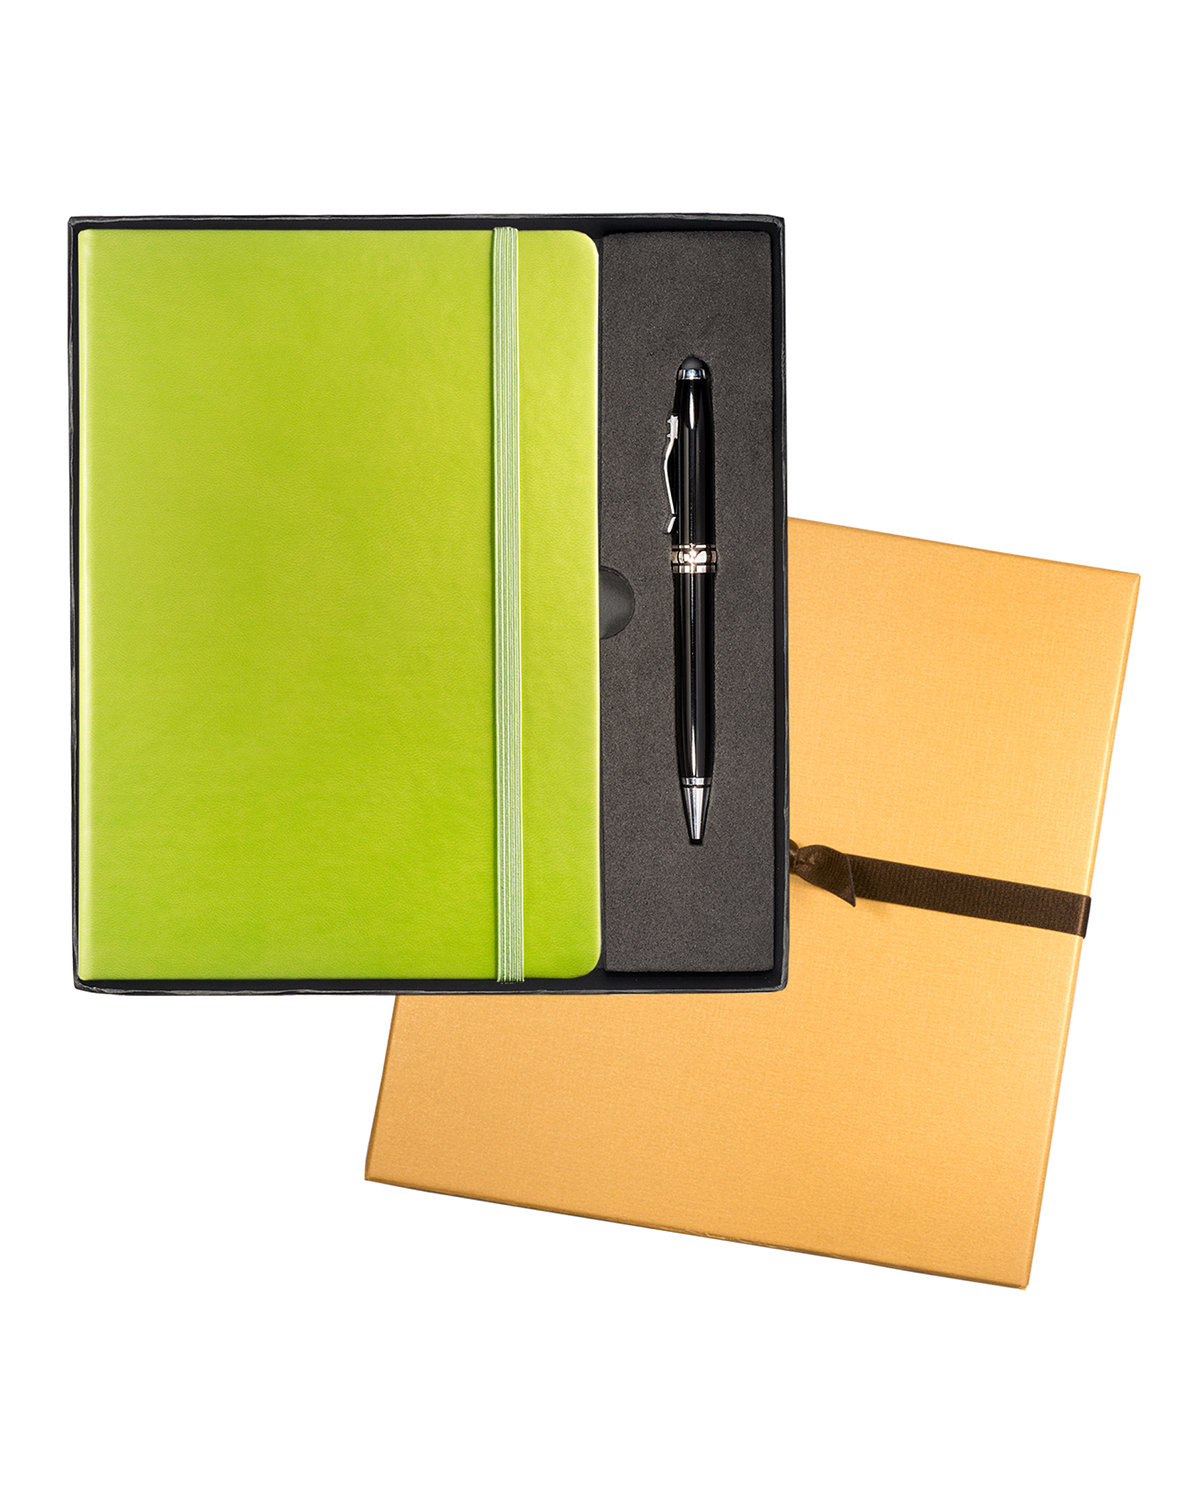 Leeman Tuscany™ Journal And Executive Stylus Pen Set lime green 